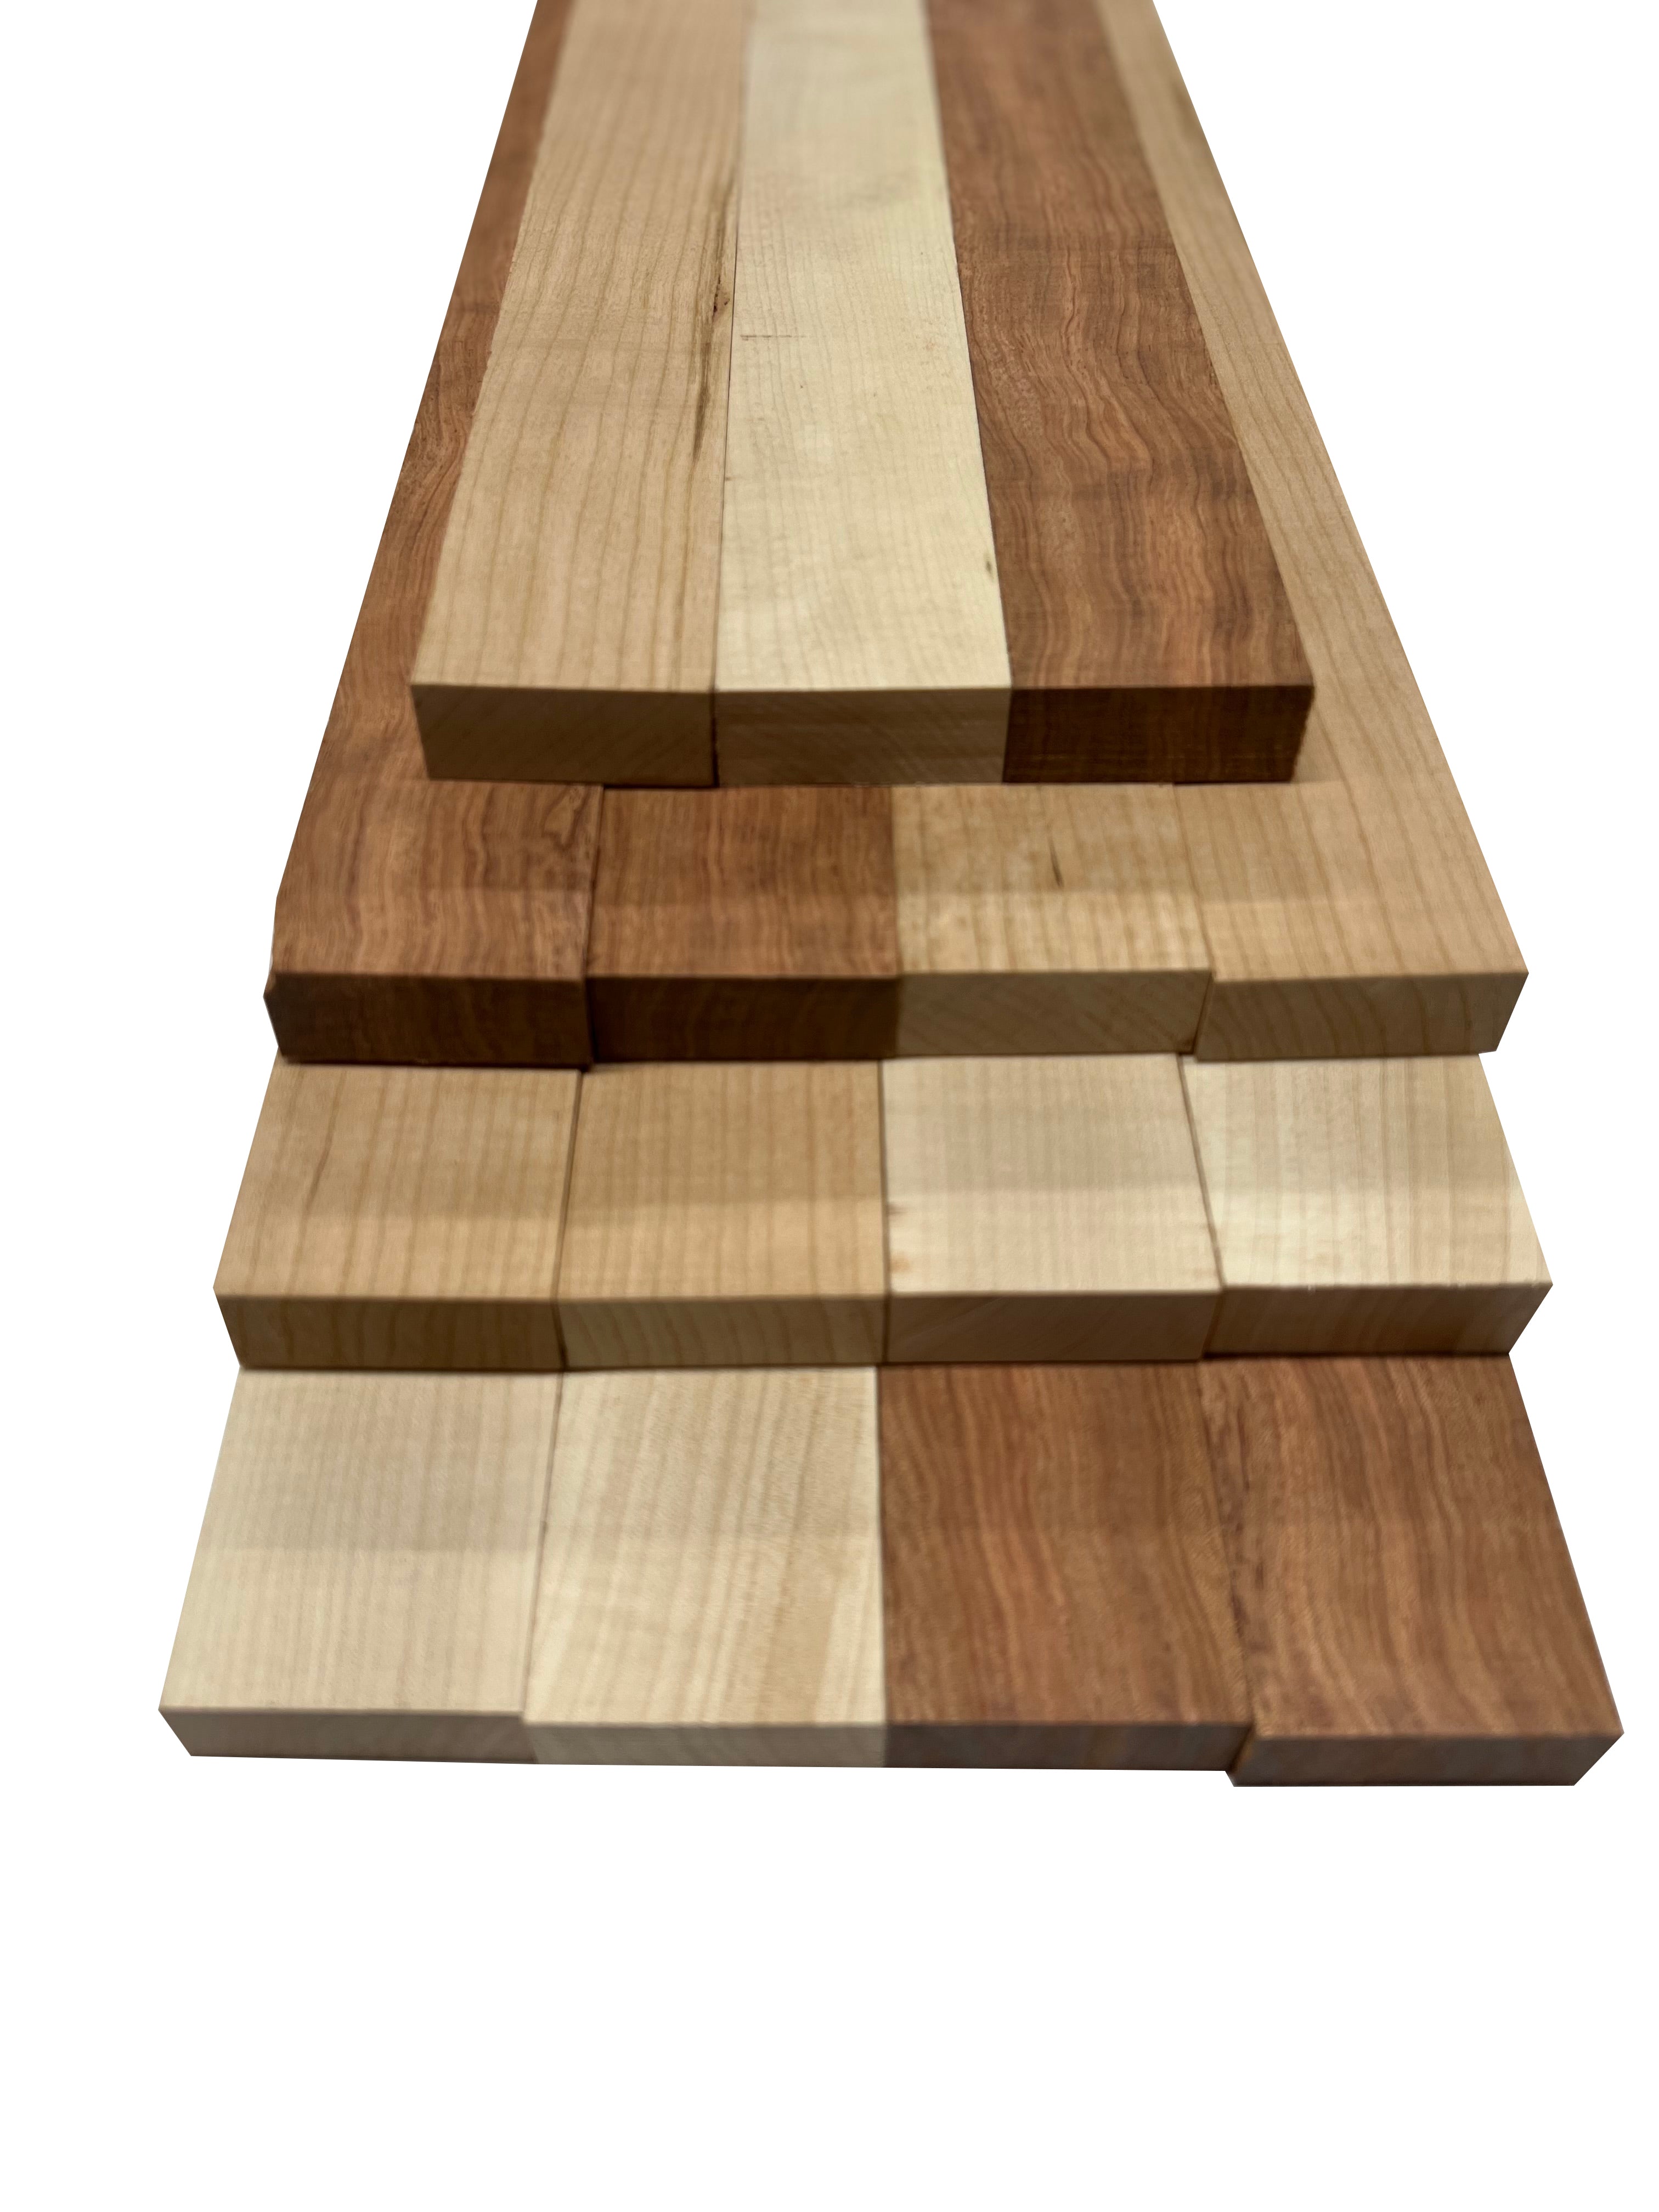 Hard Maple Live Edge Cutting Board / 2 Single-Plank Board